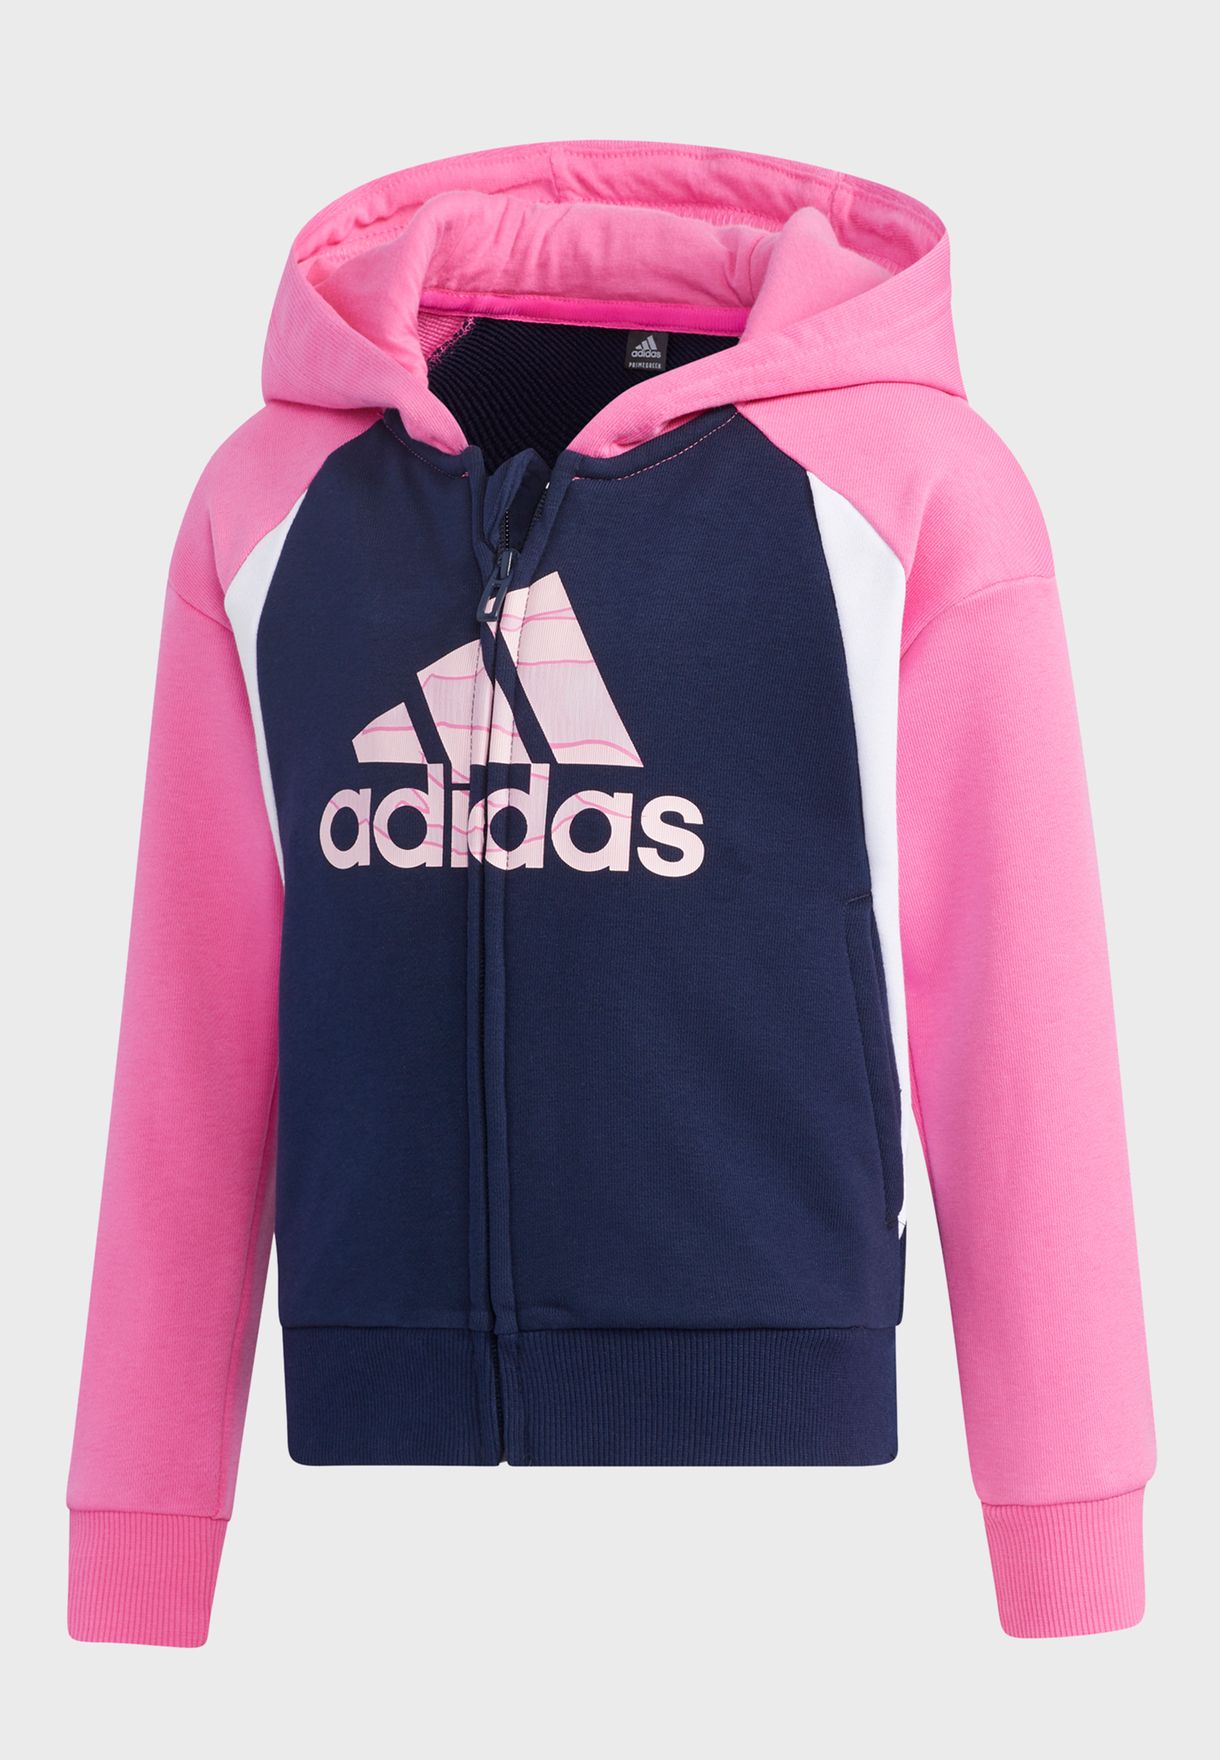 adidas pink zip up jacket